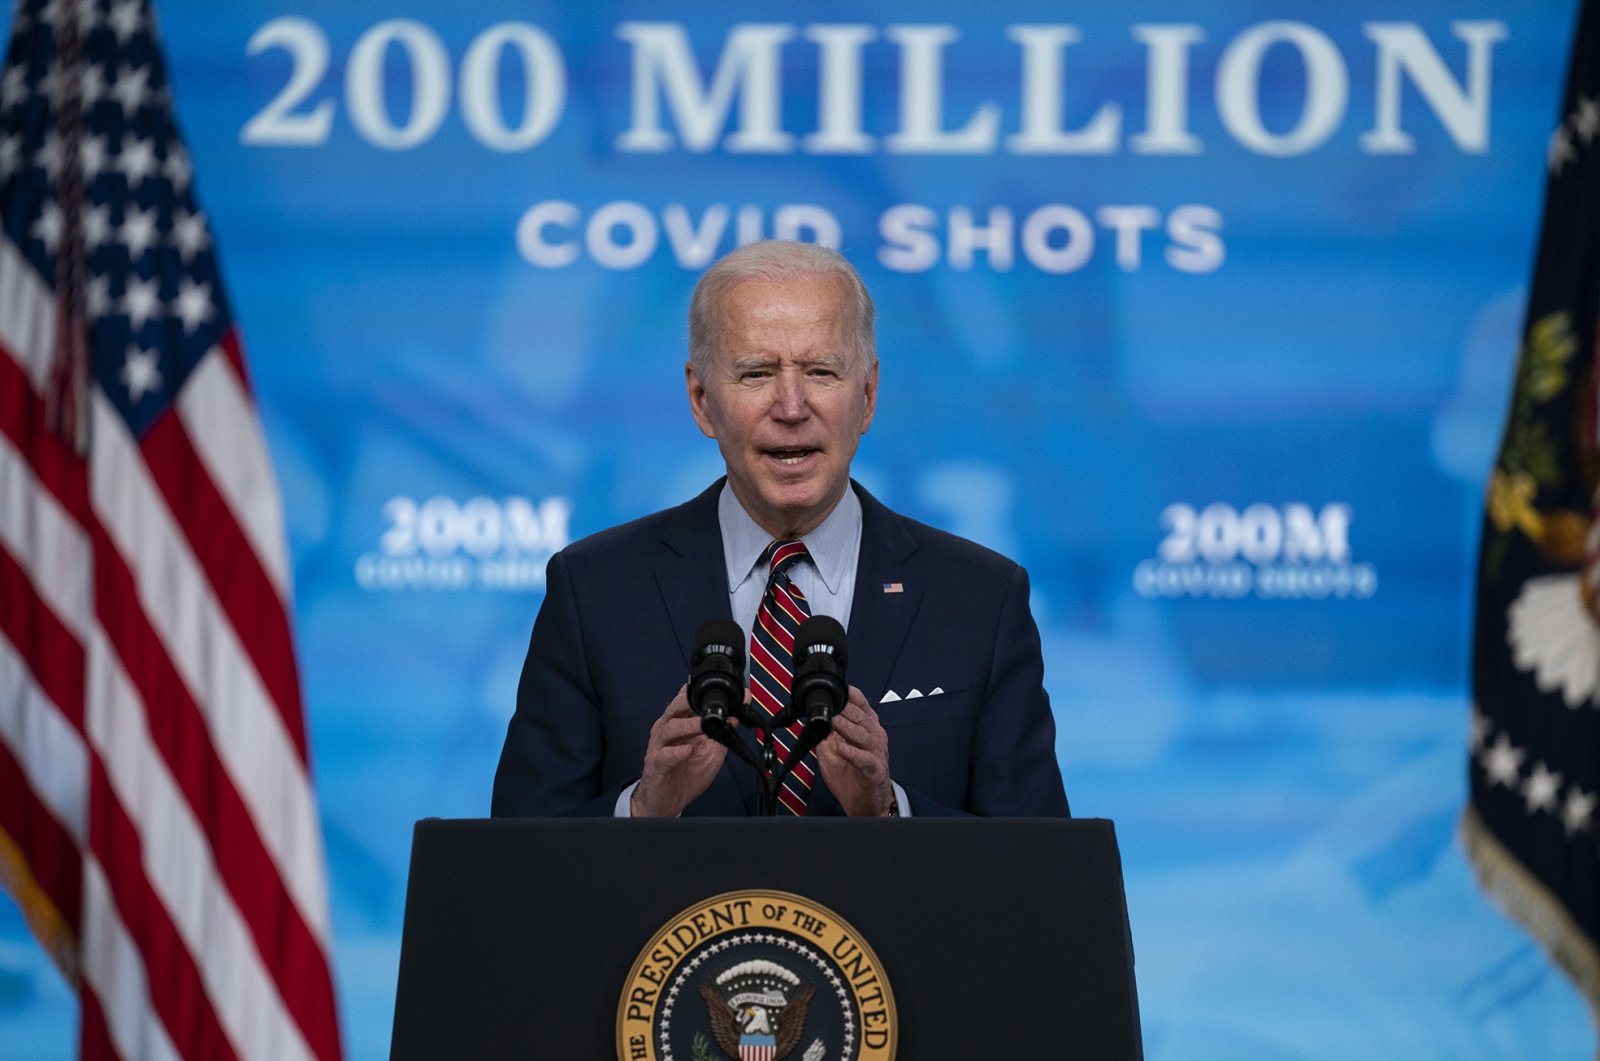 U.S. President Joe Biden speaks about COVID-19 vaccinations at the White House, Washington, D.C., U.S., April 21, 2021. (AP Photo)